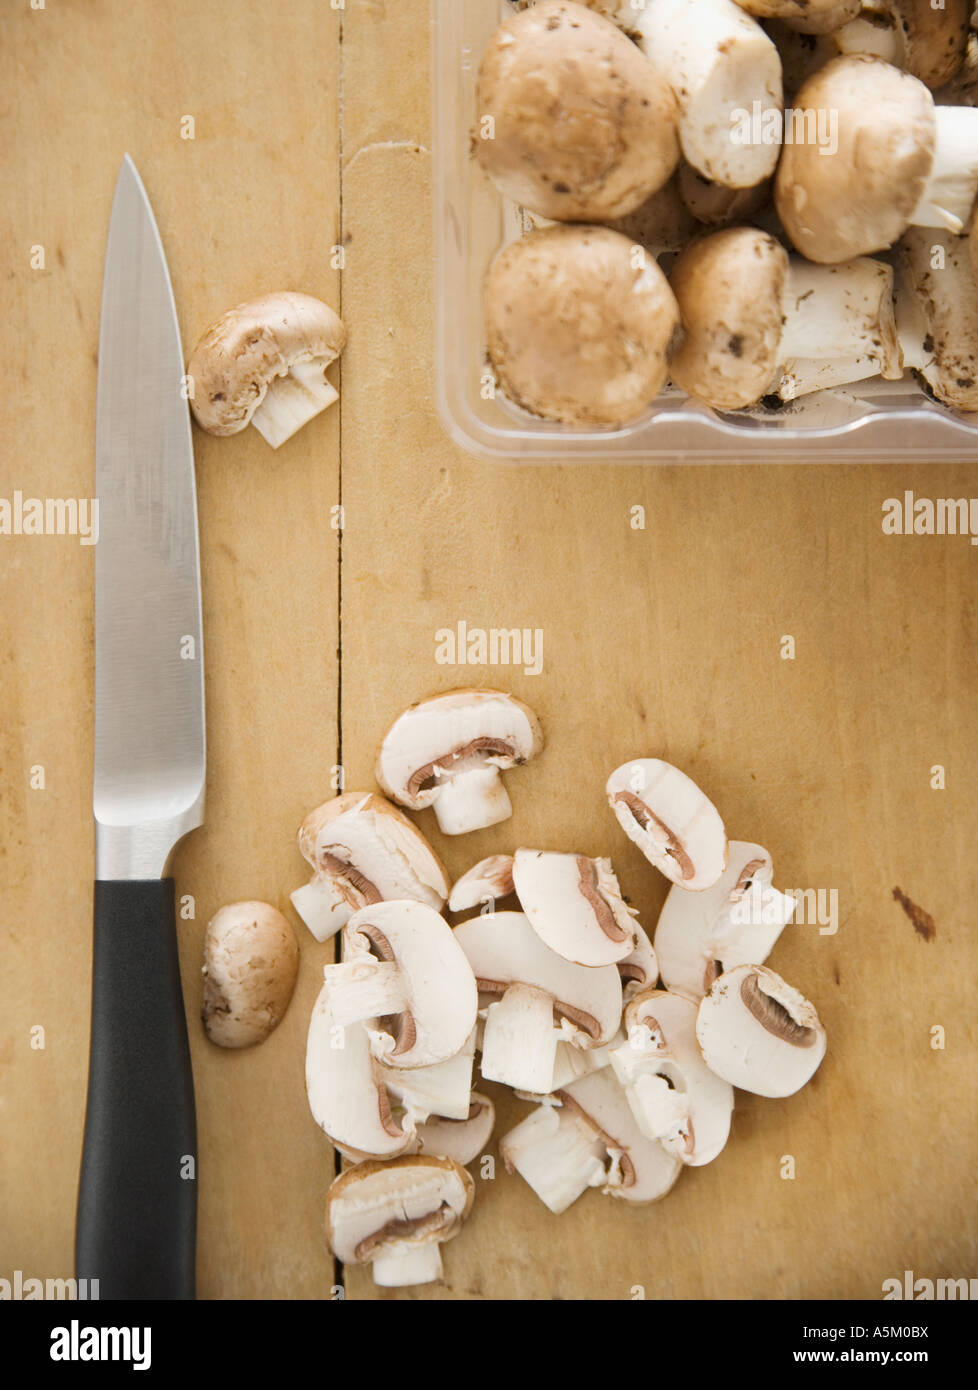 Chopped mushrooms on cutting board Stock Photo